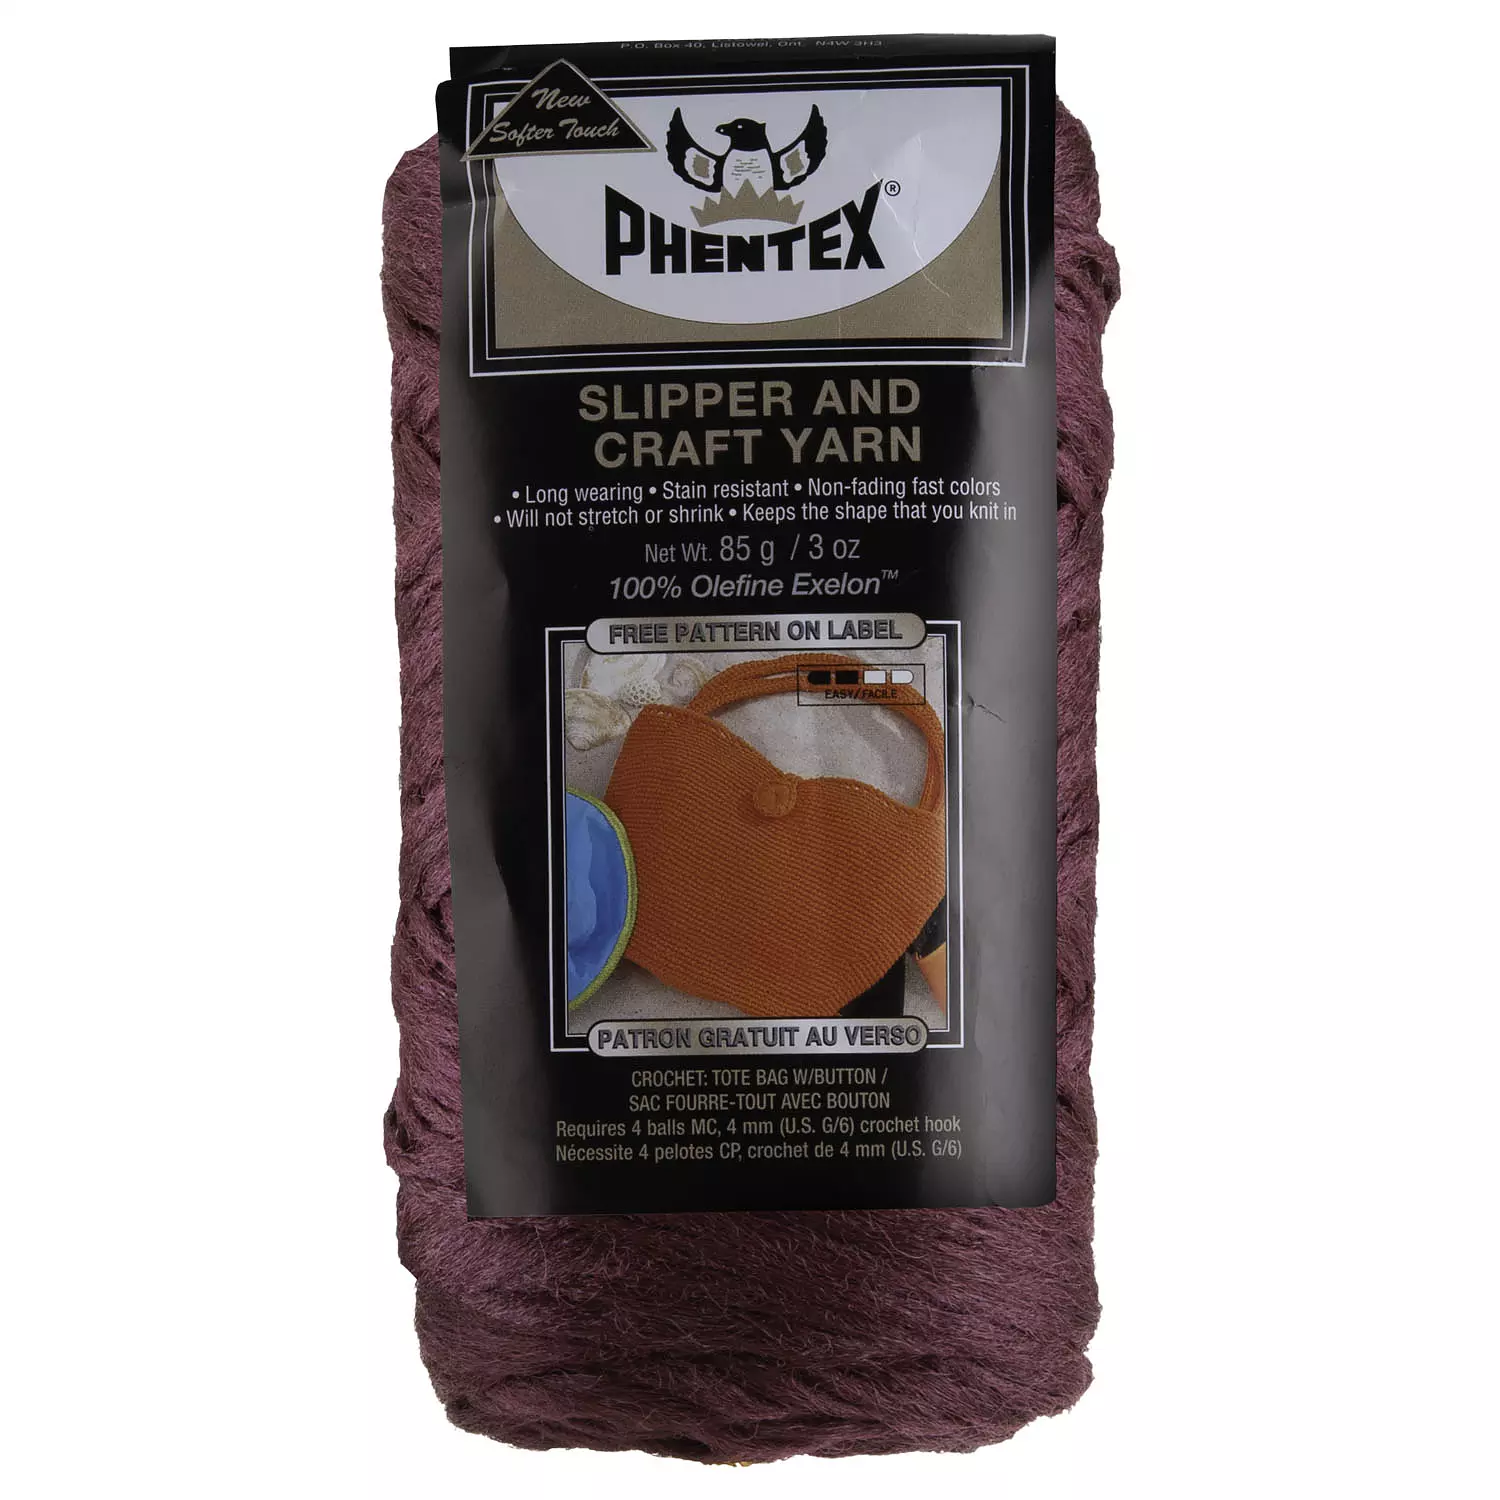 Phentex - Slipper and craft yarn, burgundy